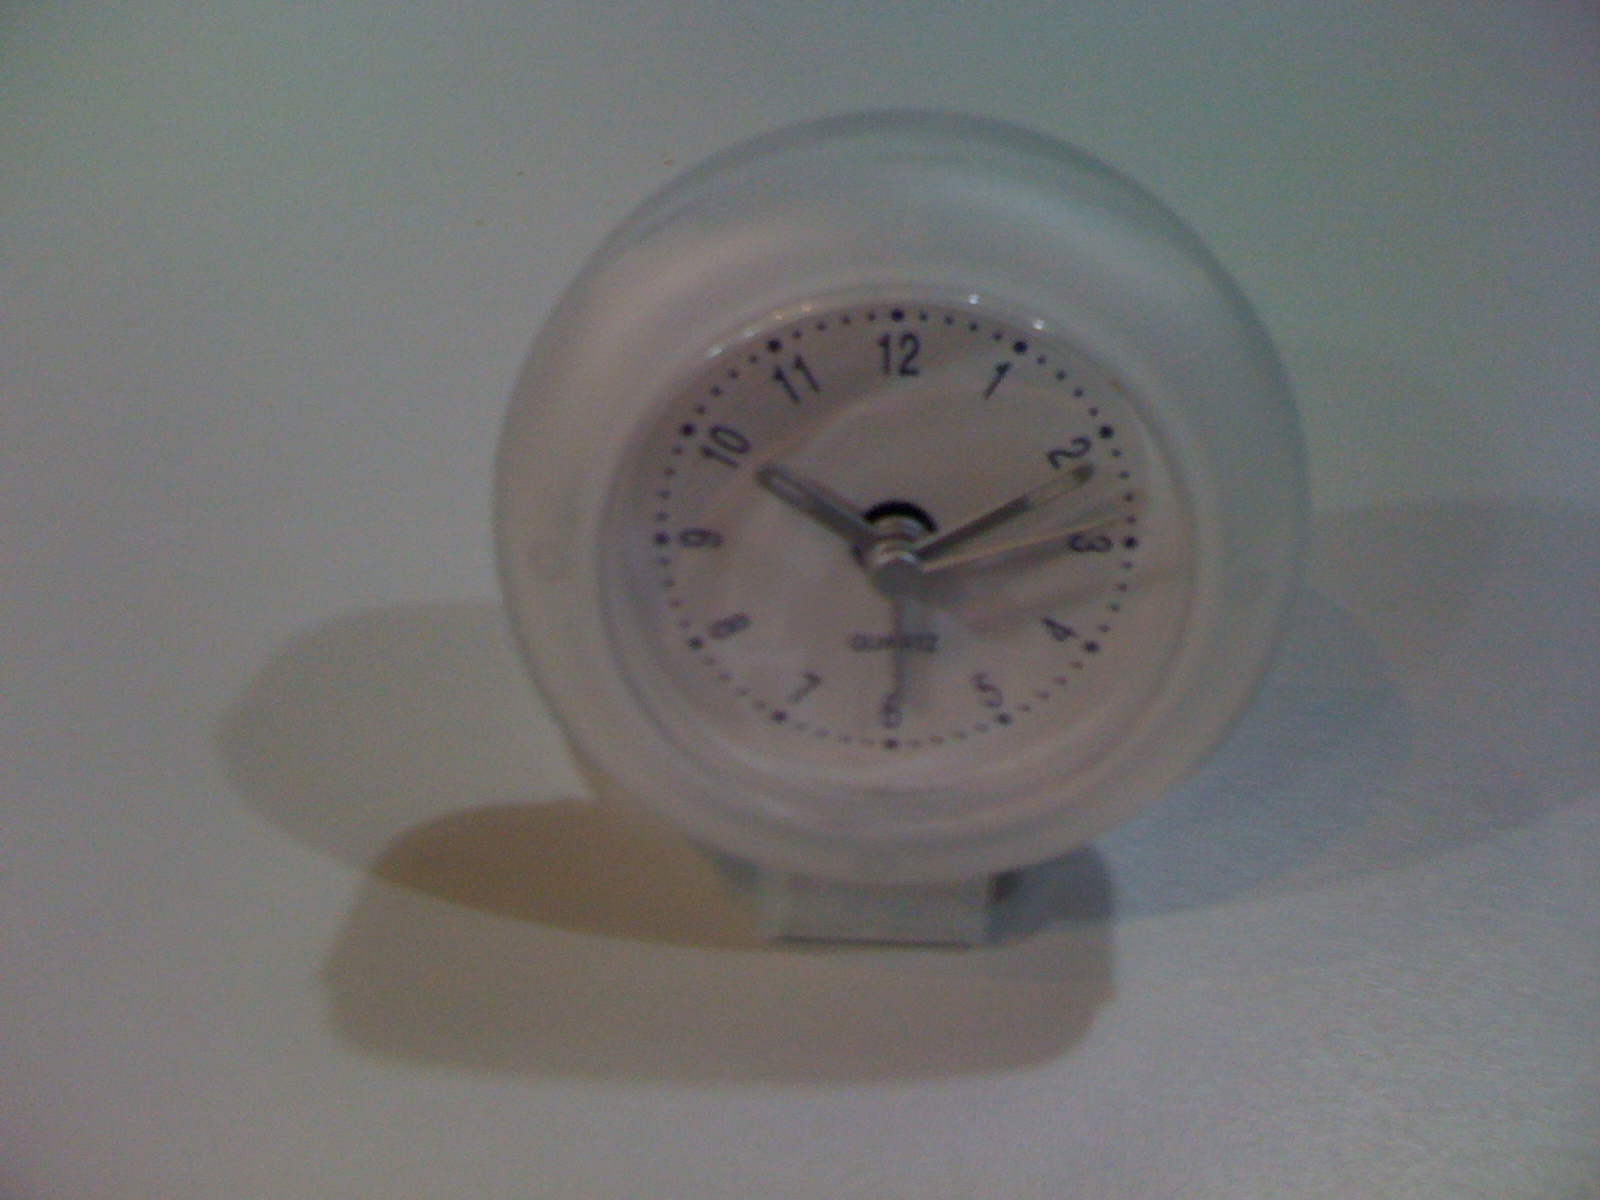 Clock in use